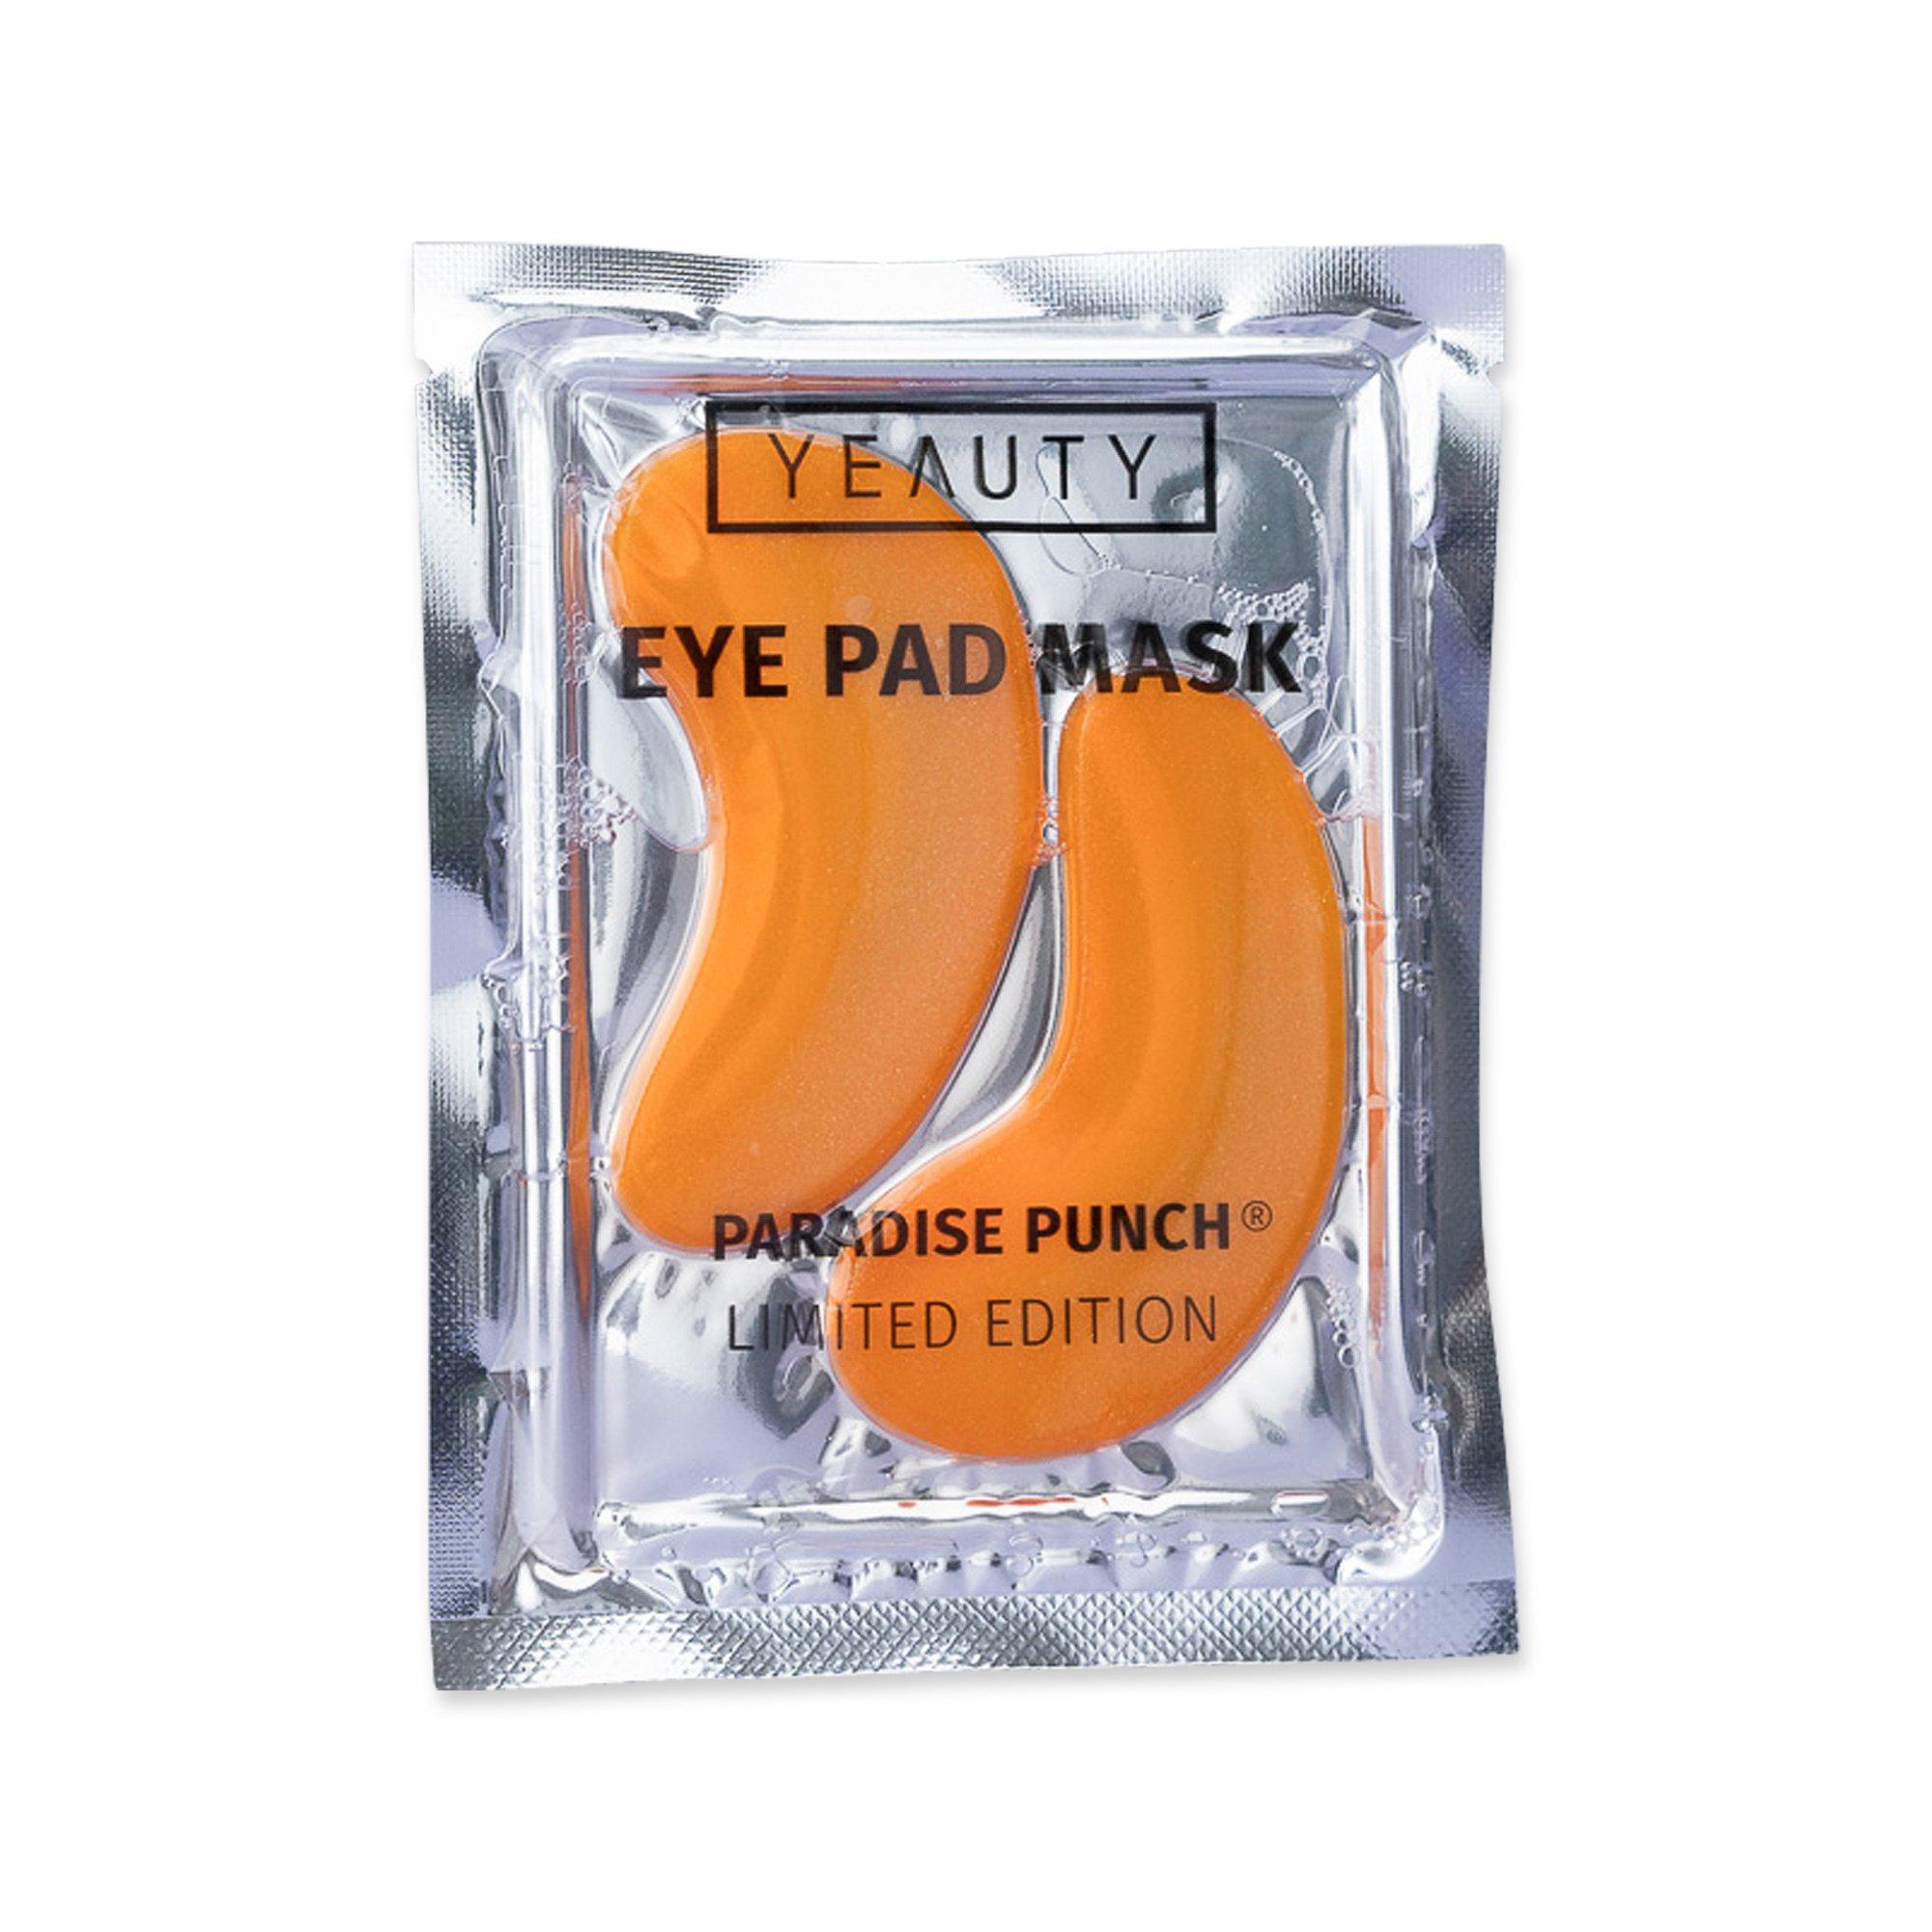 Yeauty Paradise Punch Eye Pad Mask Online Kaufen Manor 